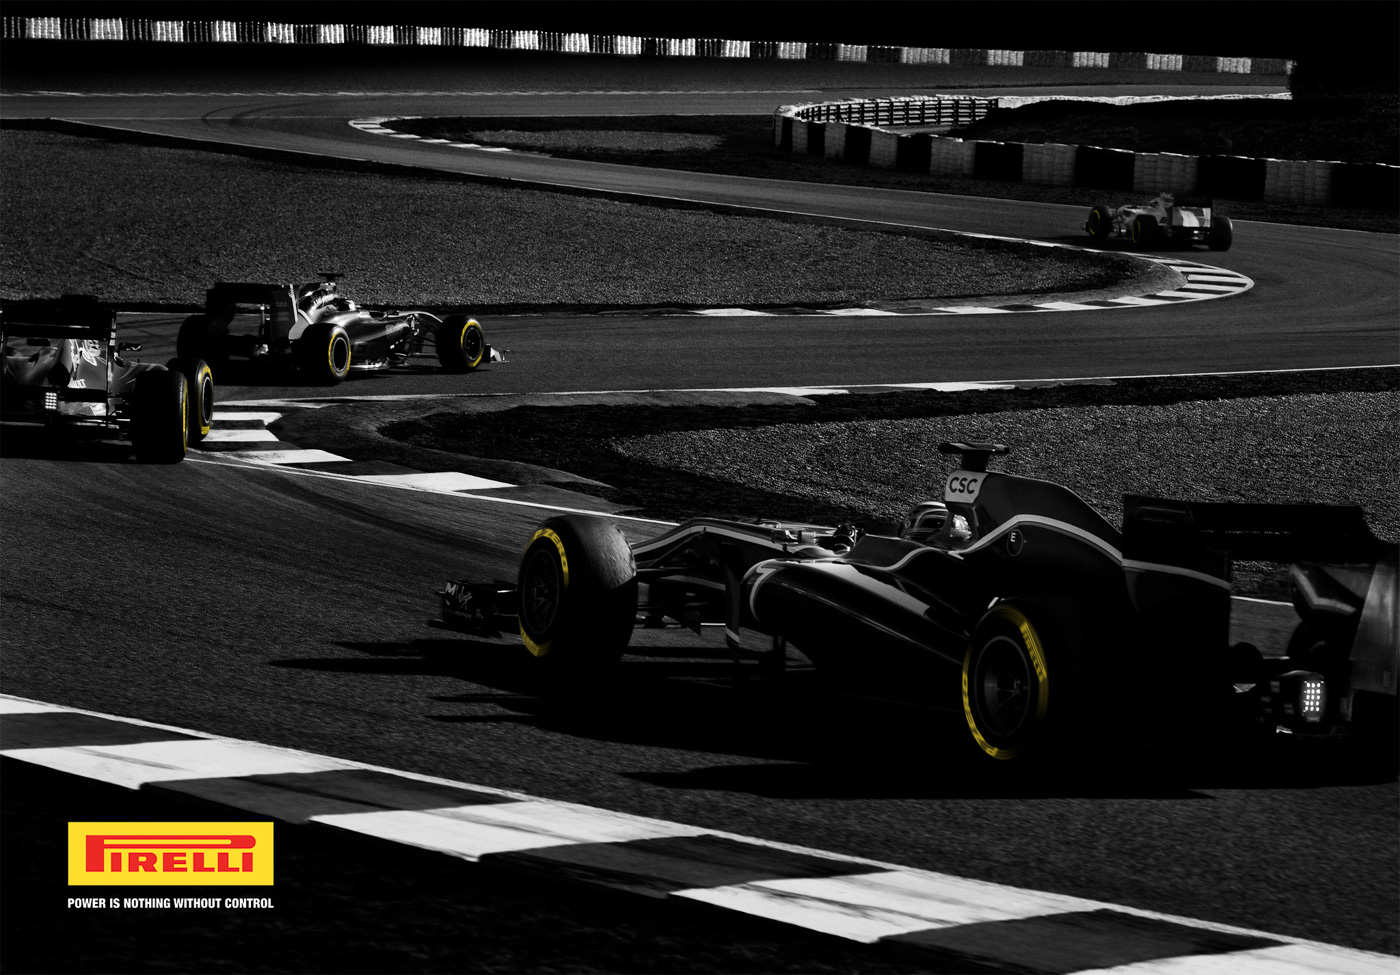 &lt;p&gt;&lt;strong&gt;Pirelli Formula One&lt;/strong&gt;____&lt;a href=“/area-of-your-site”&gt;Series of 6&lt;/a&gt;&lt;/p&gt; 